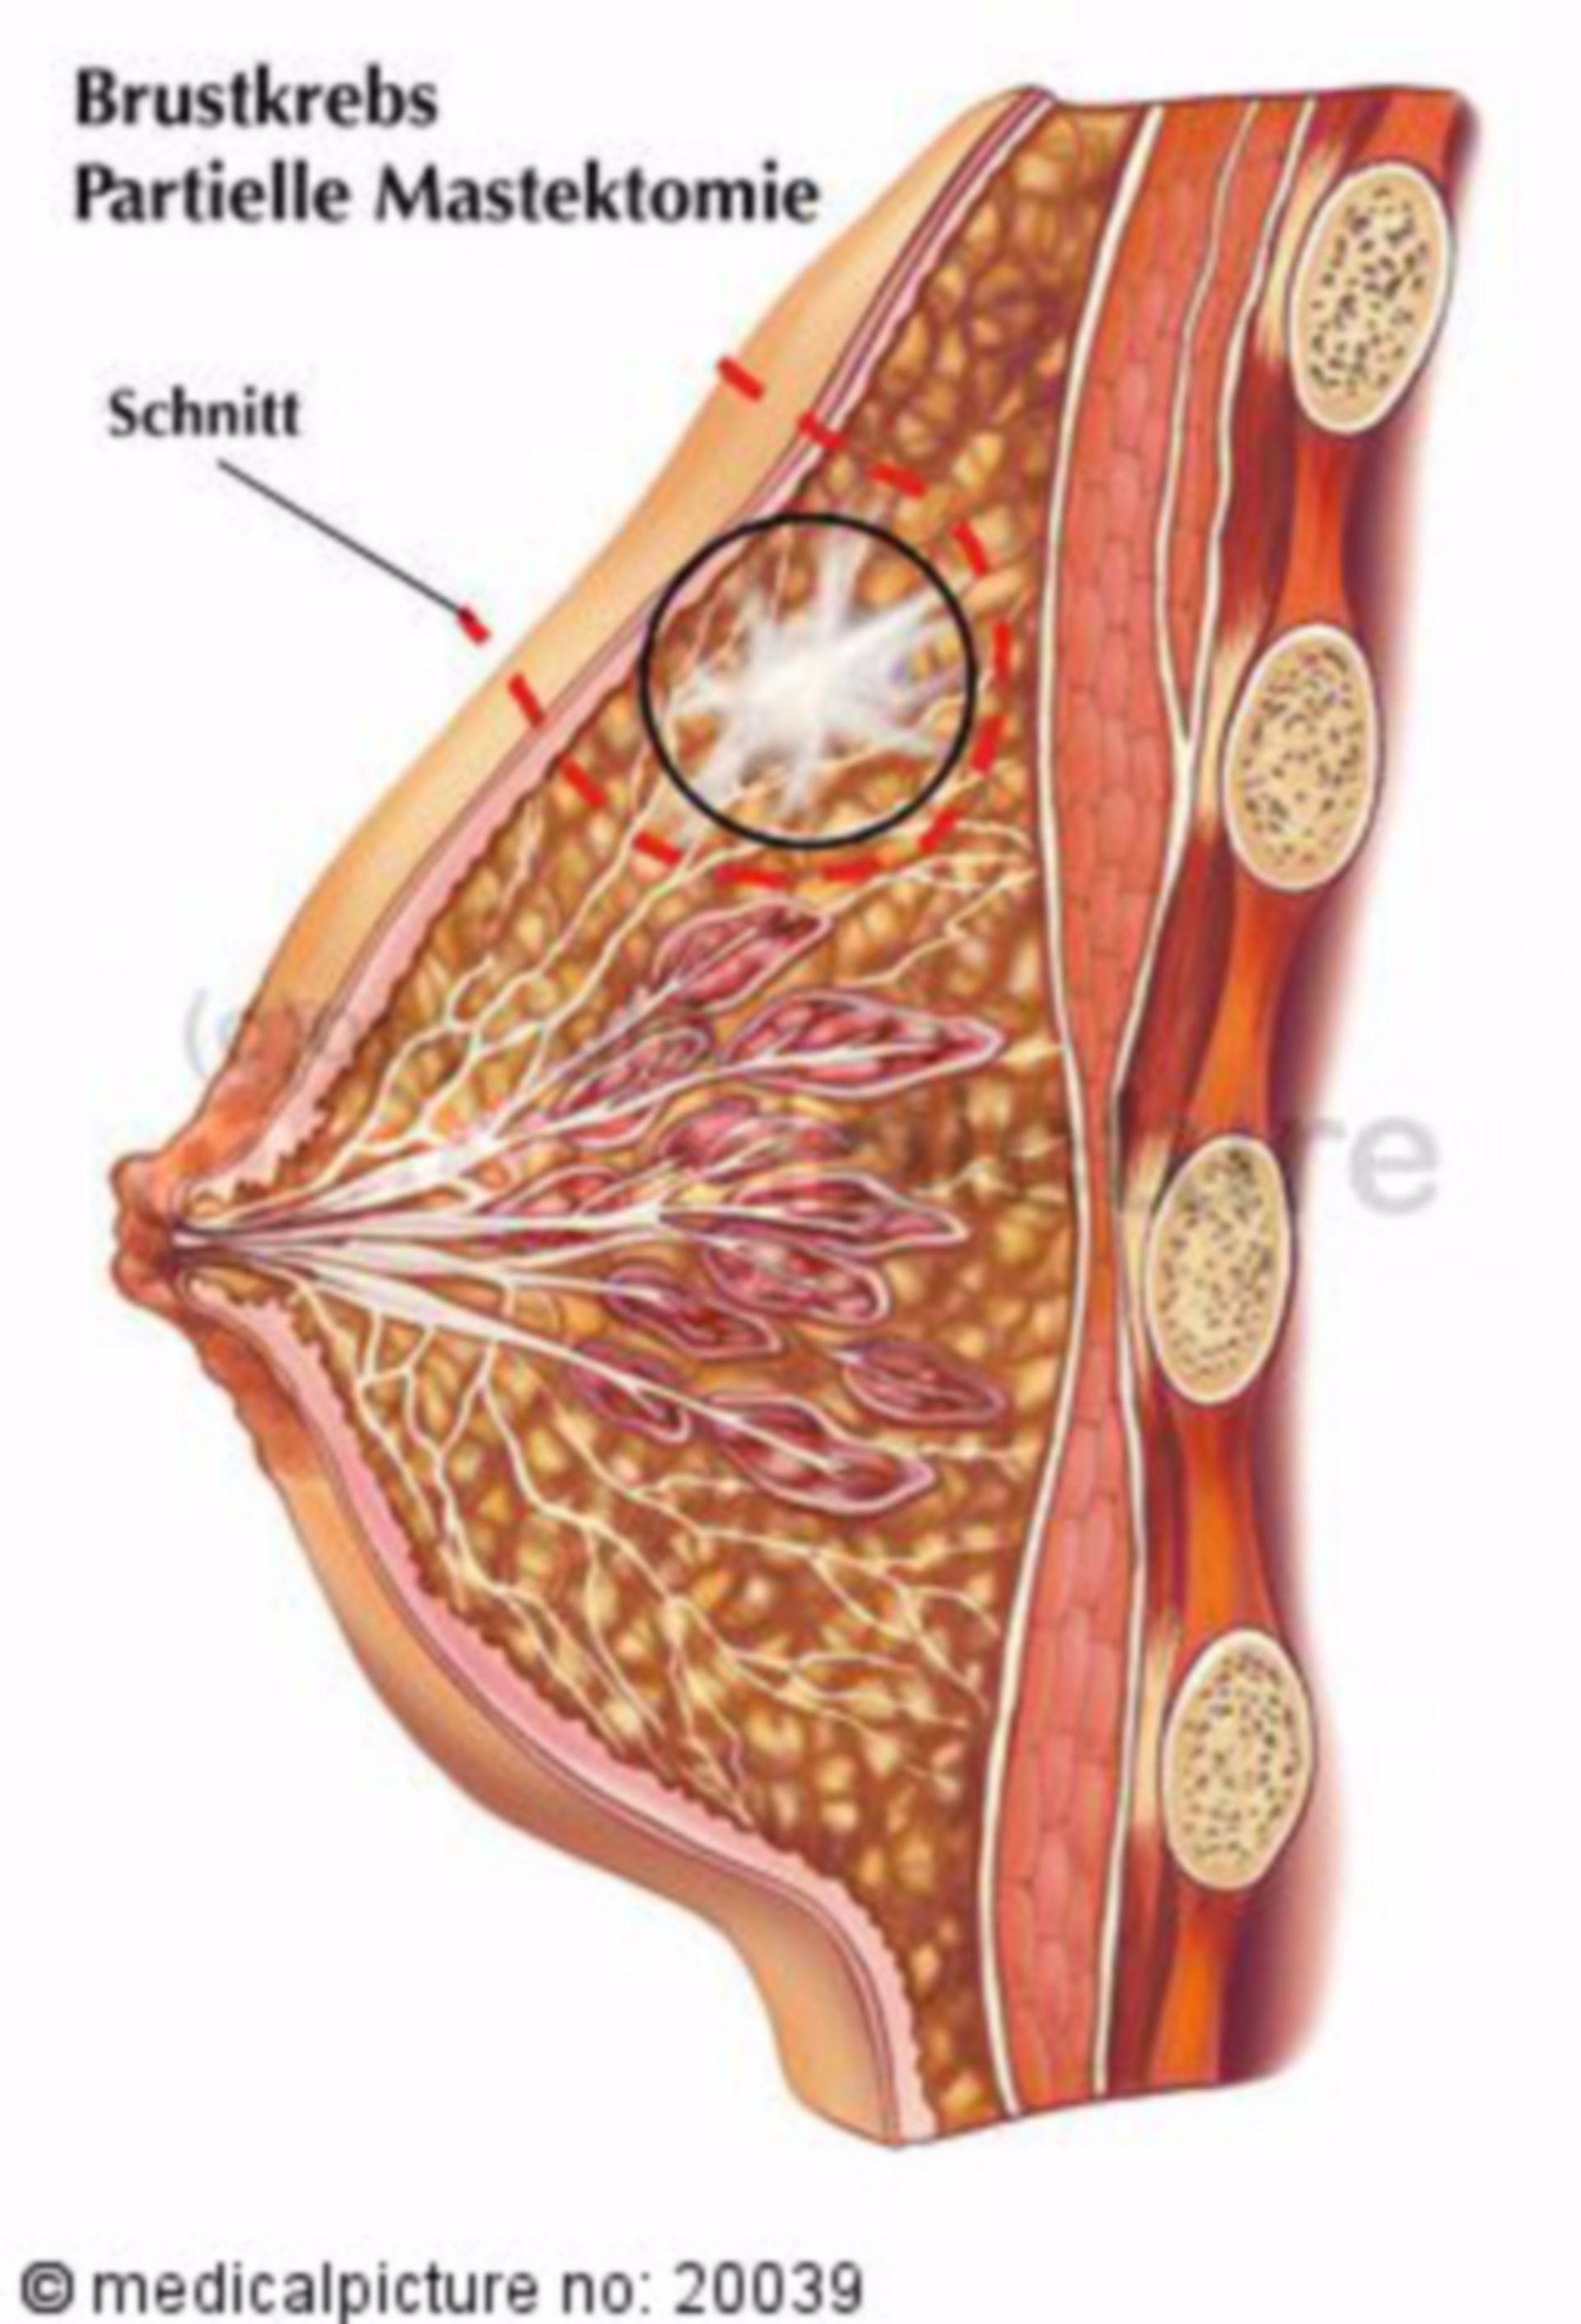 Partial Mastectomy in Mammary Carcinoma